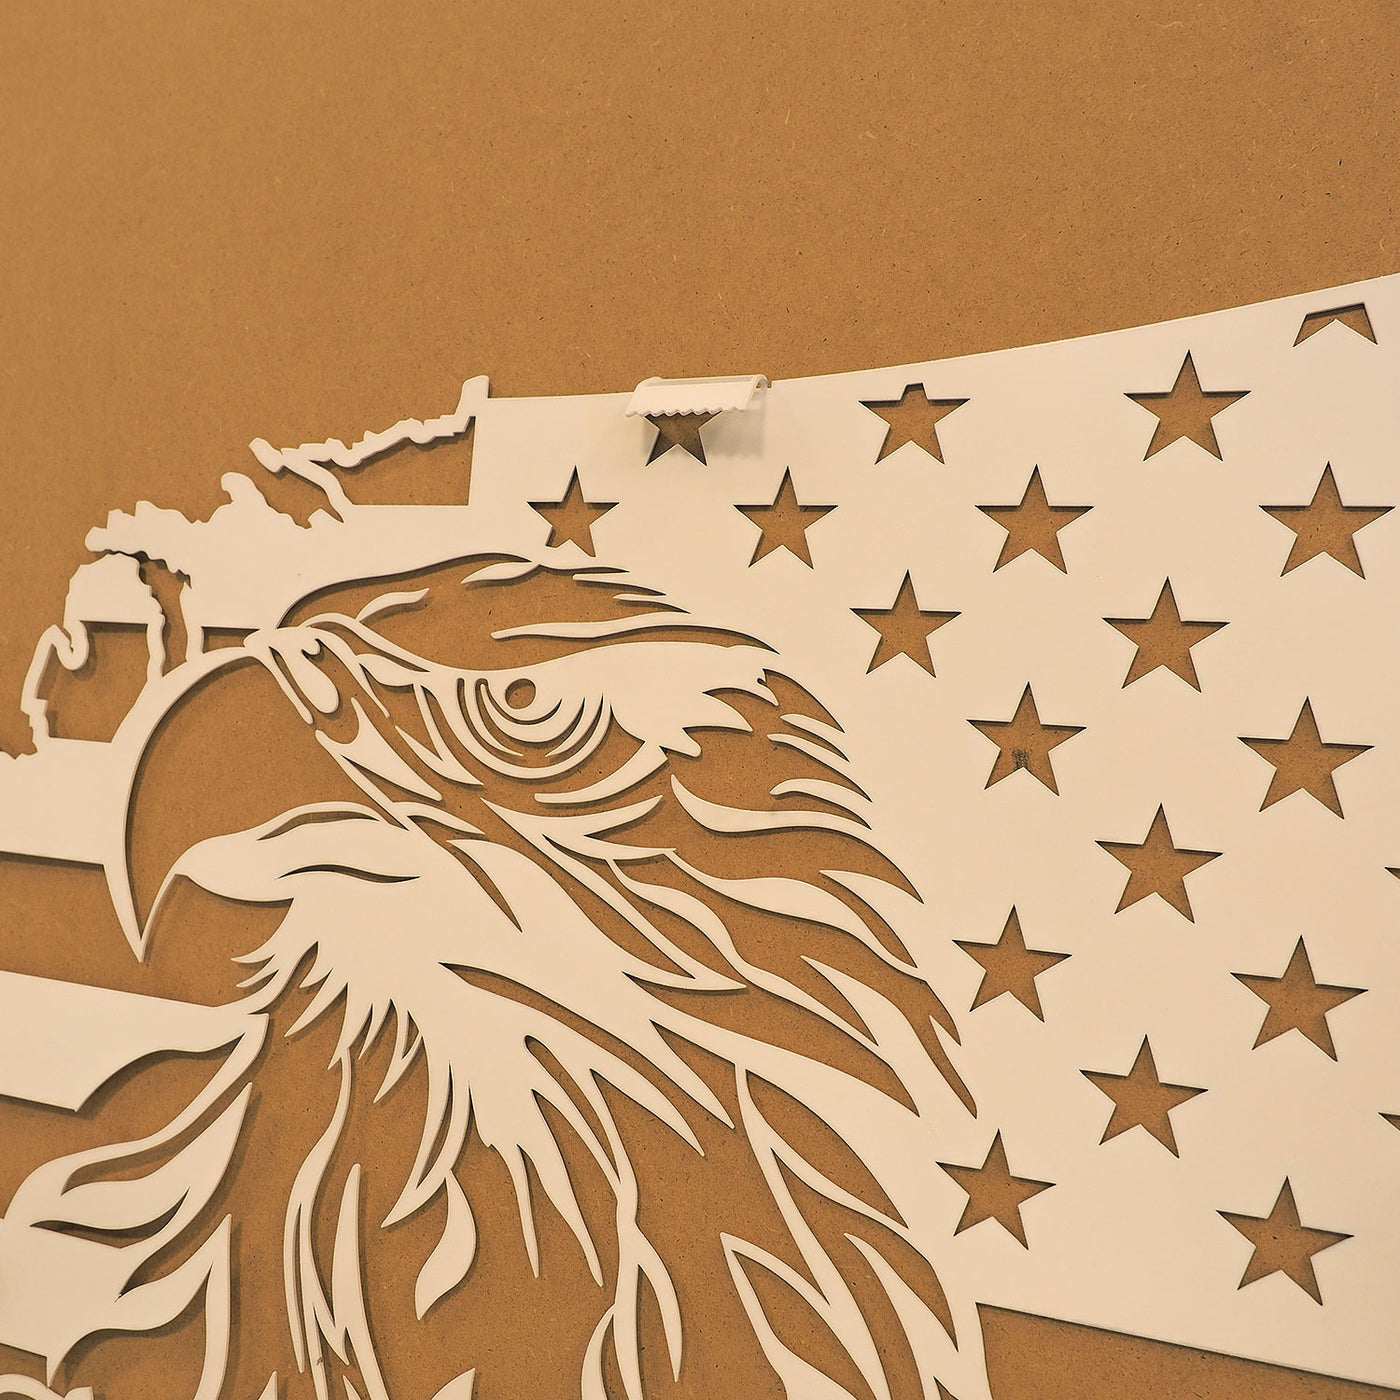 Eagle and American Flag Burnt Metal Painting - APT606